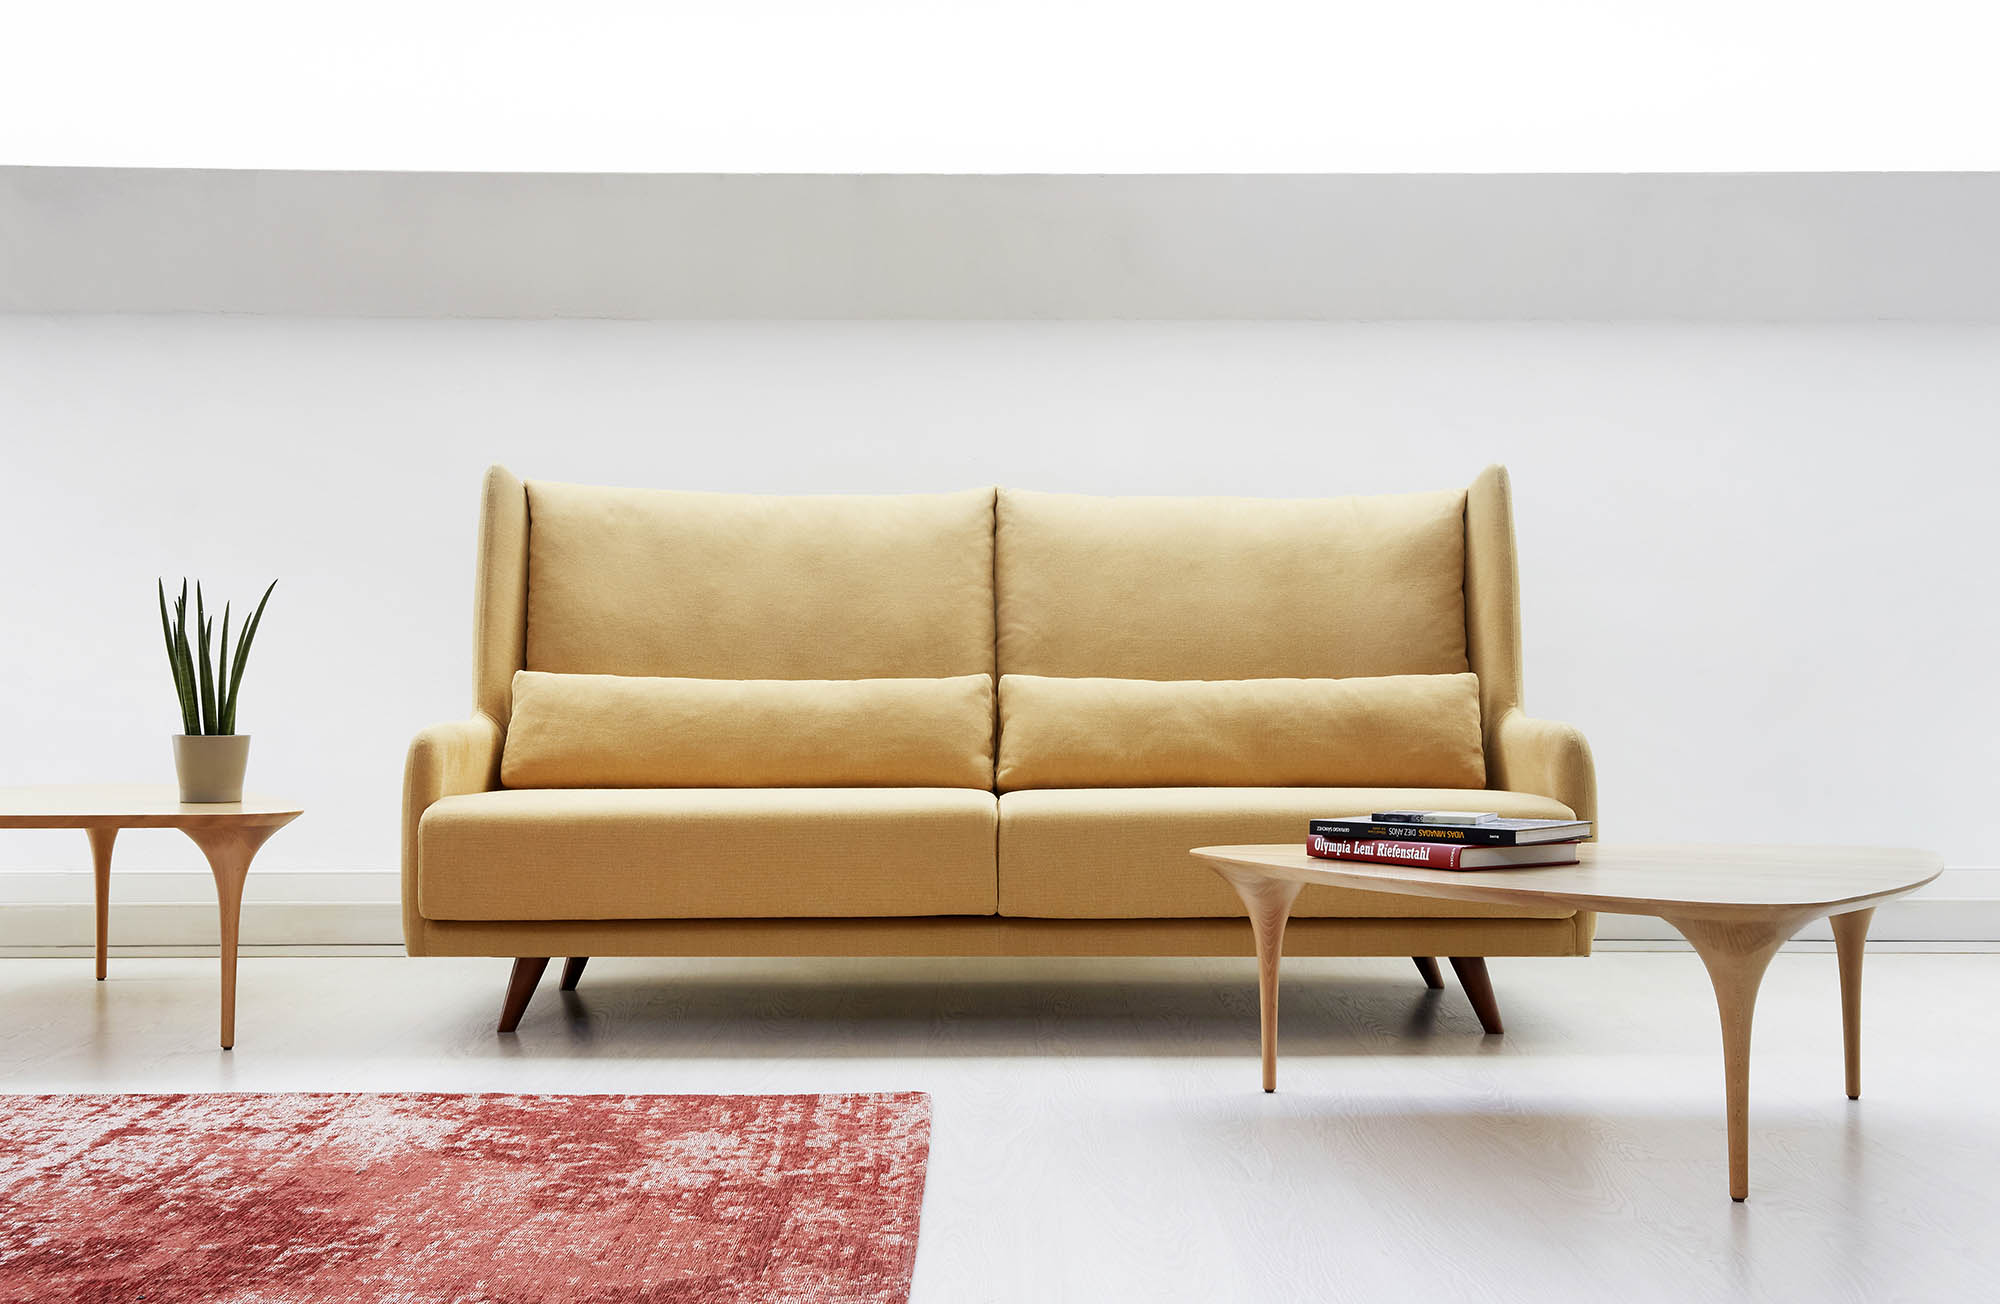 grassoler-producto-sofa-conctract-onix-galeria-2